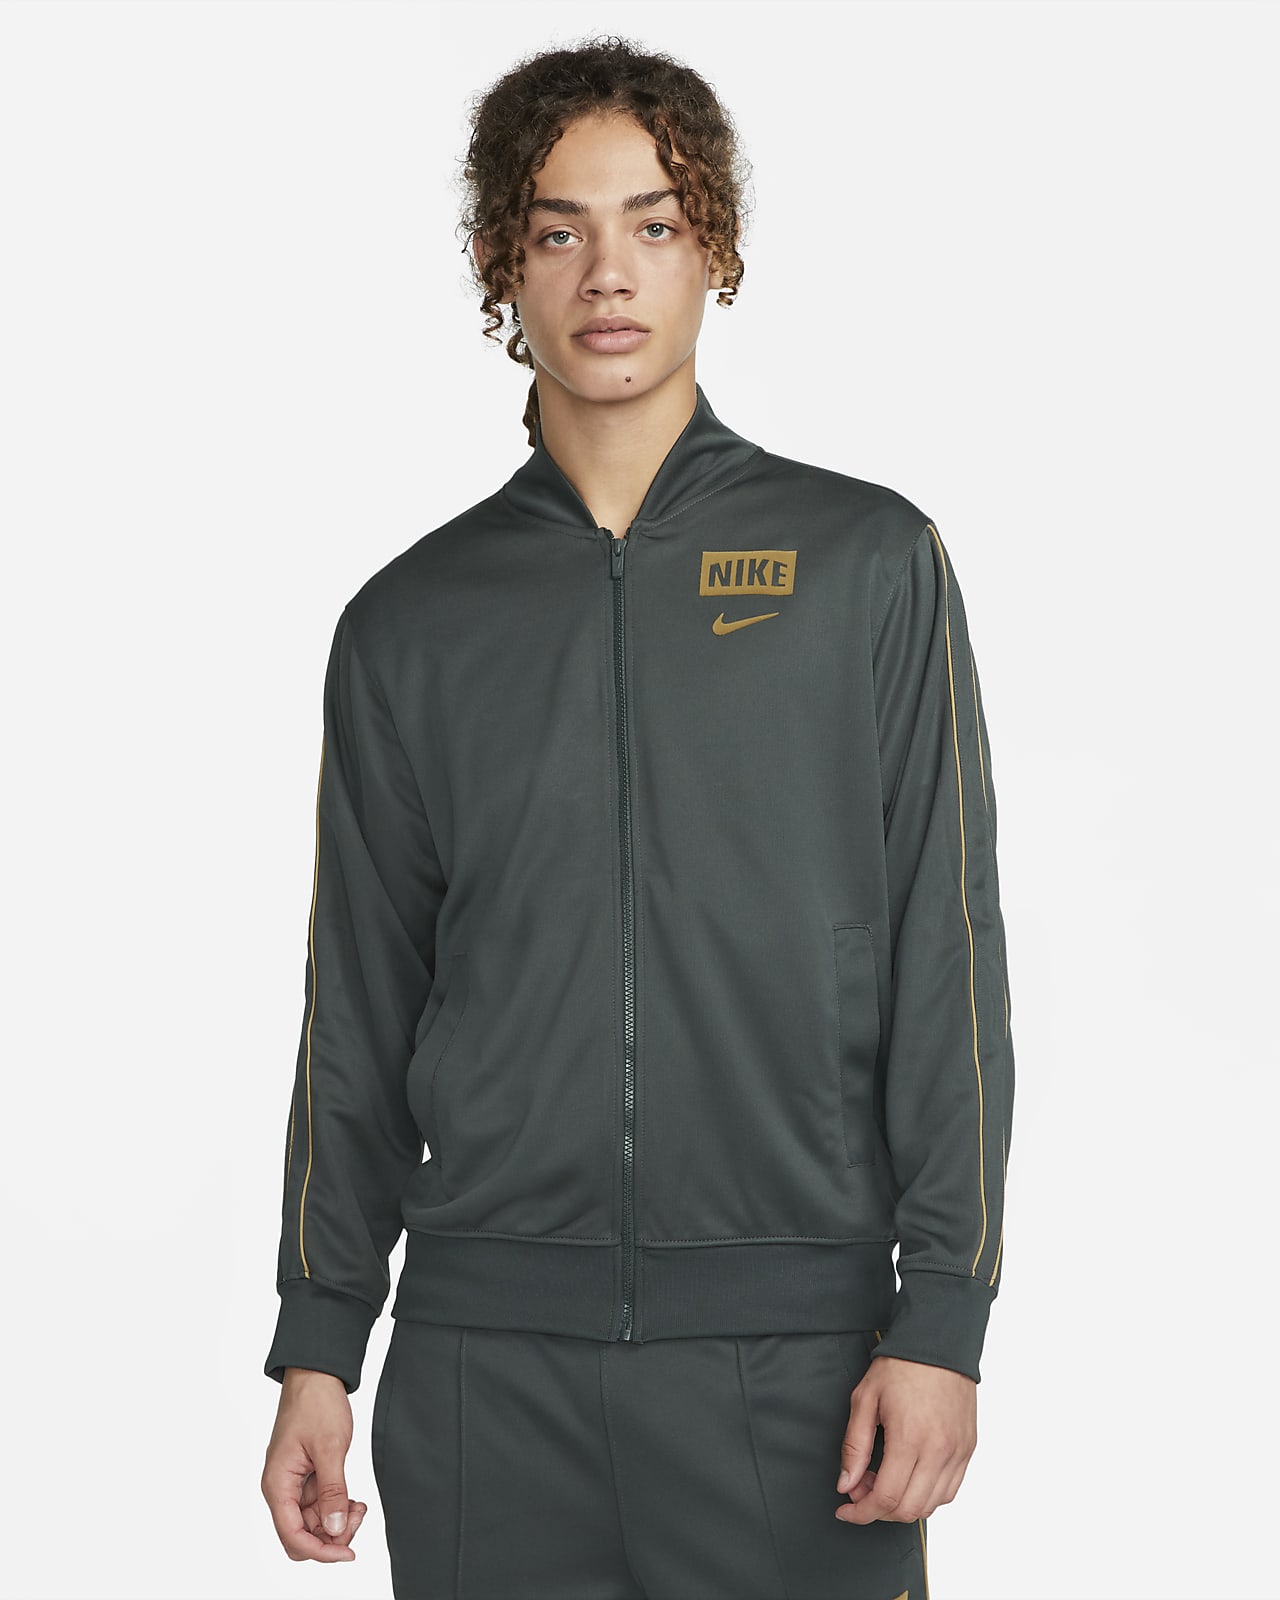 Nike Sportswear Men's Retro Bomber Jacket. Nike NL